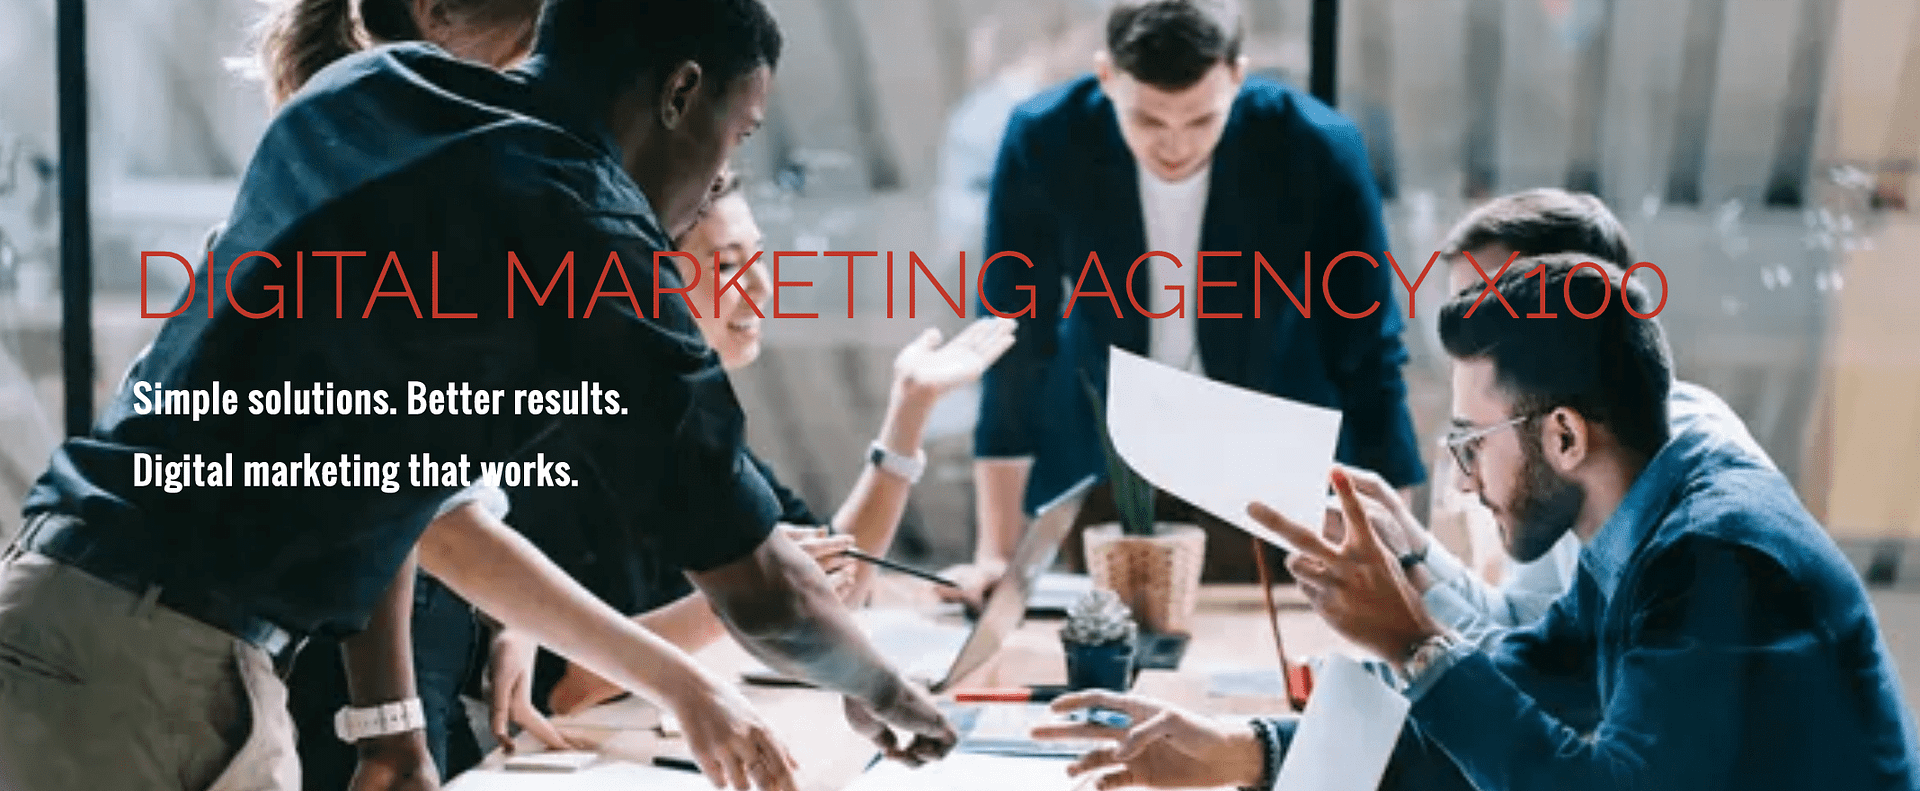 Digital-Marketing-Agency-X100-JP-LOGAN